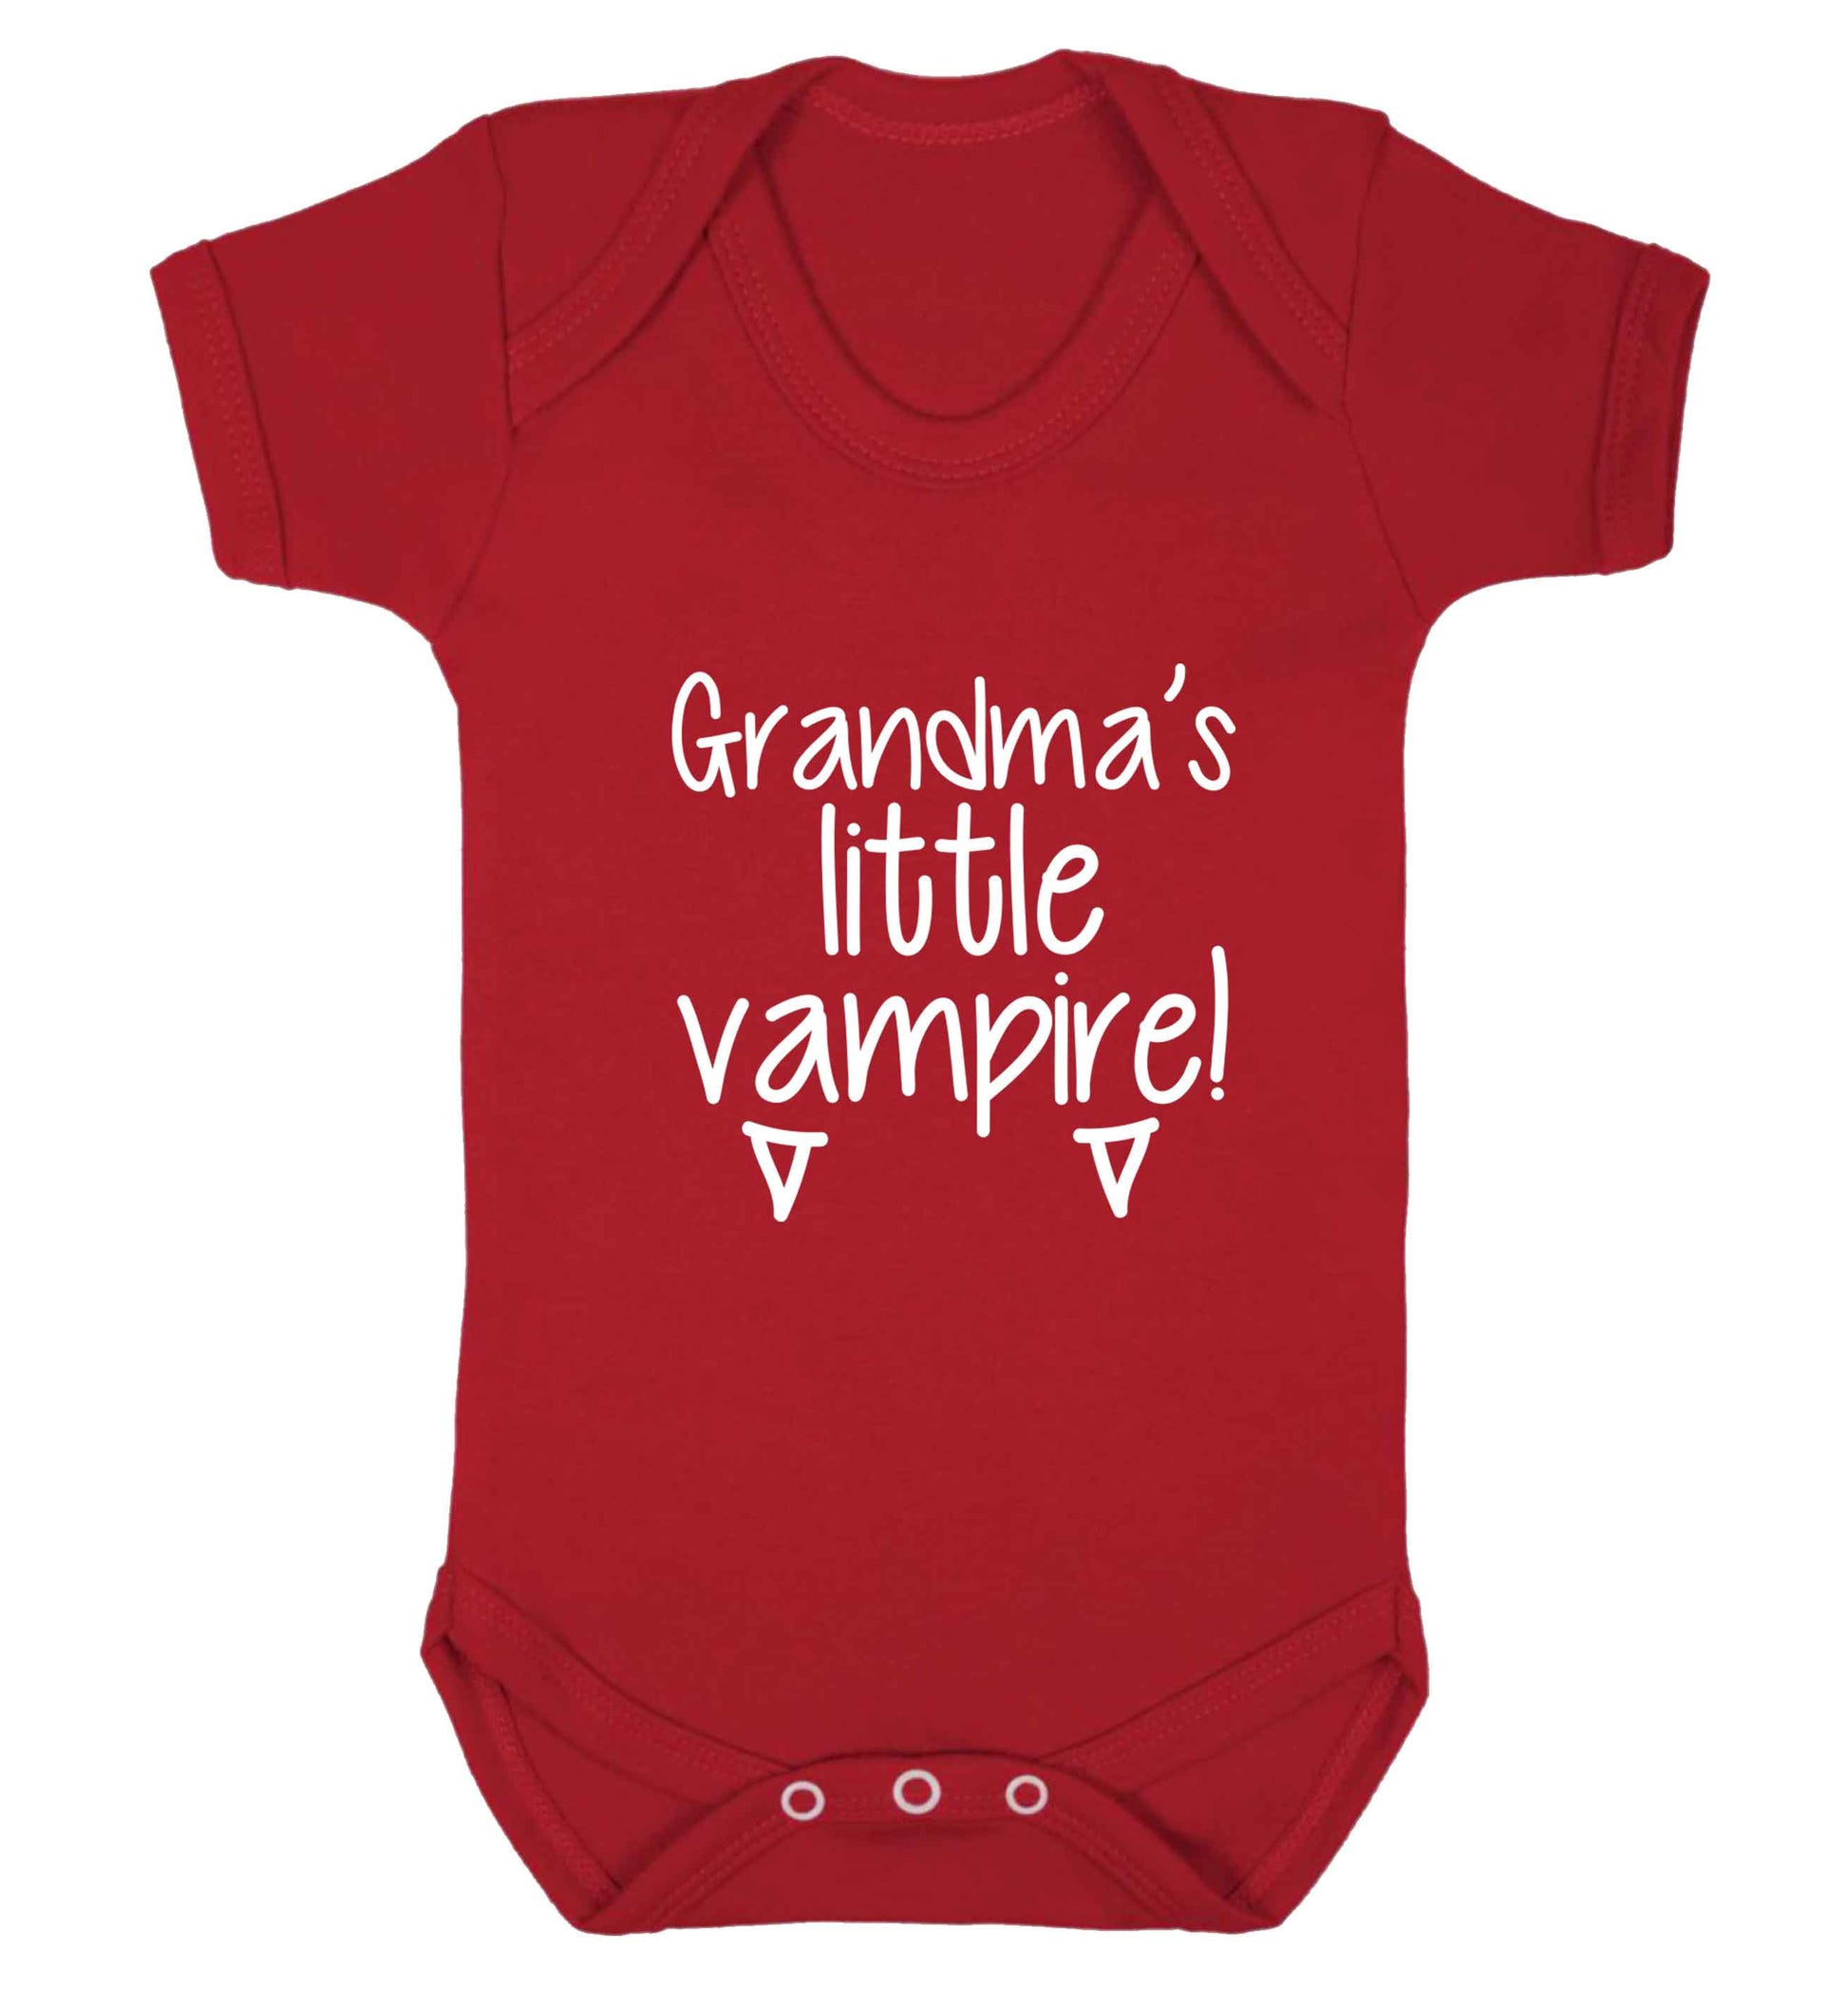 Grandma's little vampire baby vest red 18-24 months